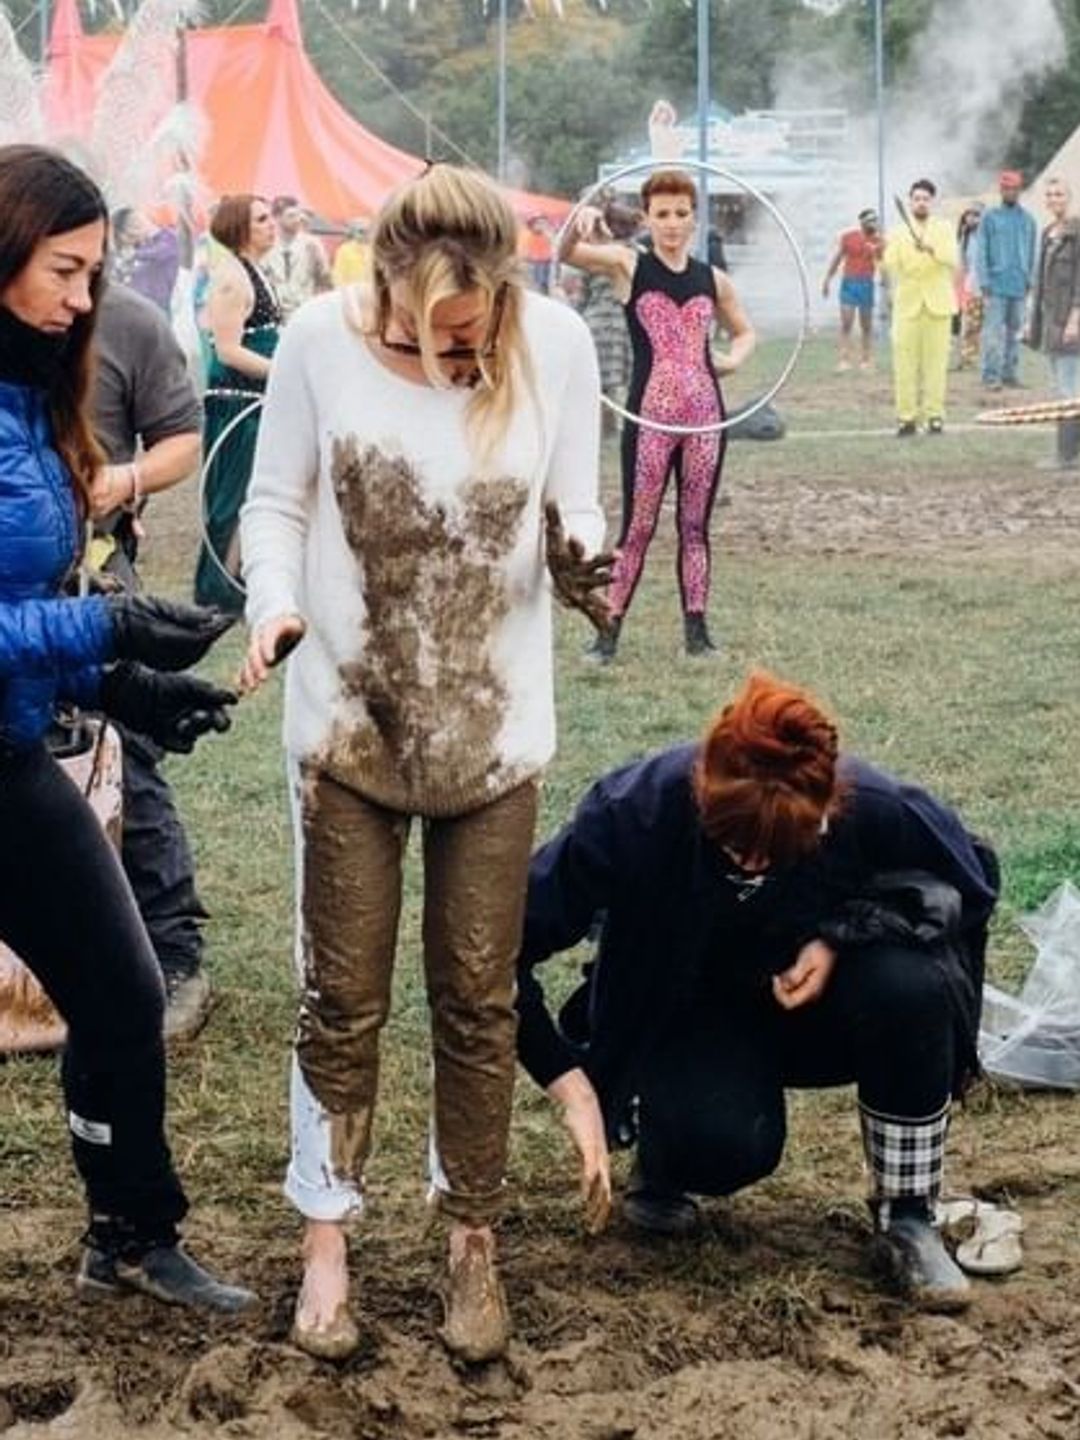 Renee Zellweger as Bridget Jones at Glastonbury covered in mud